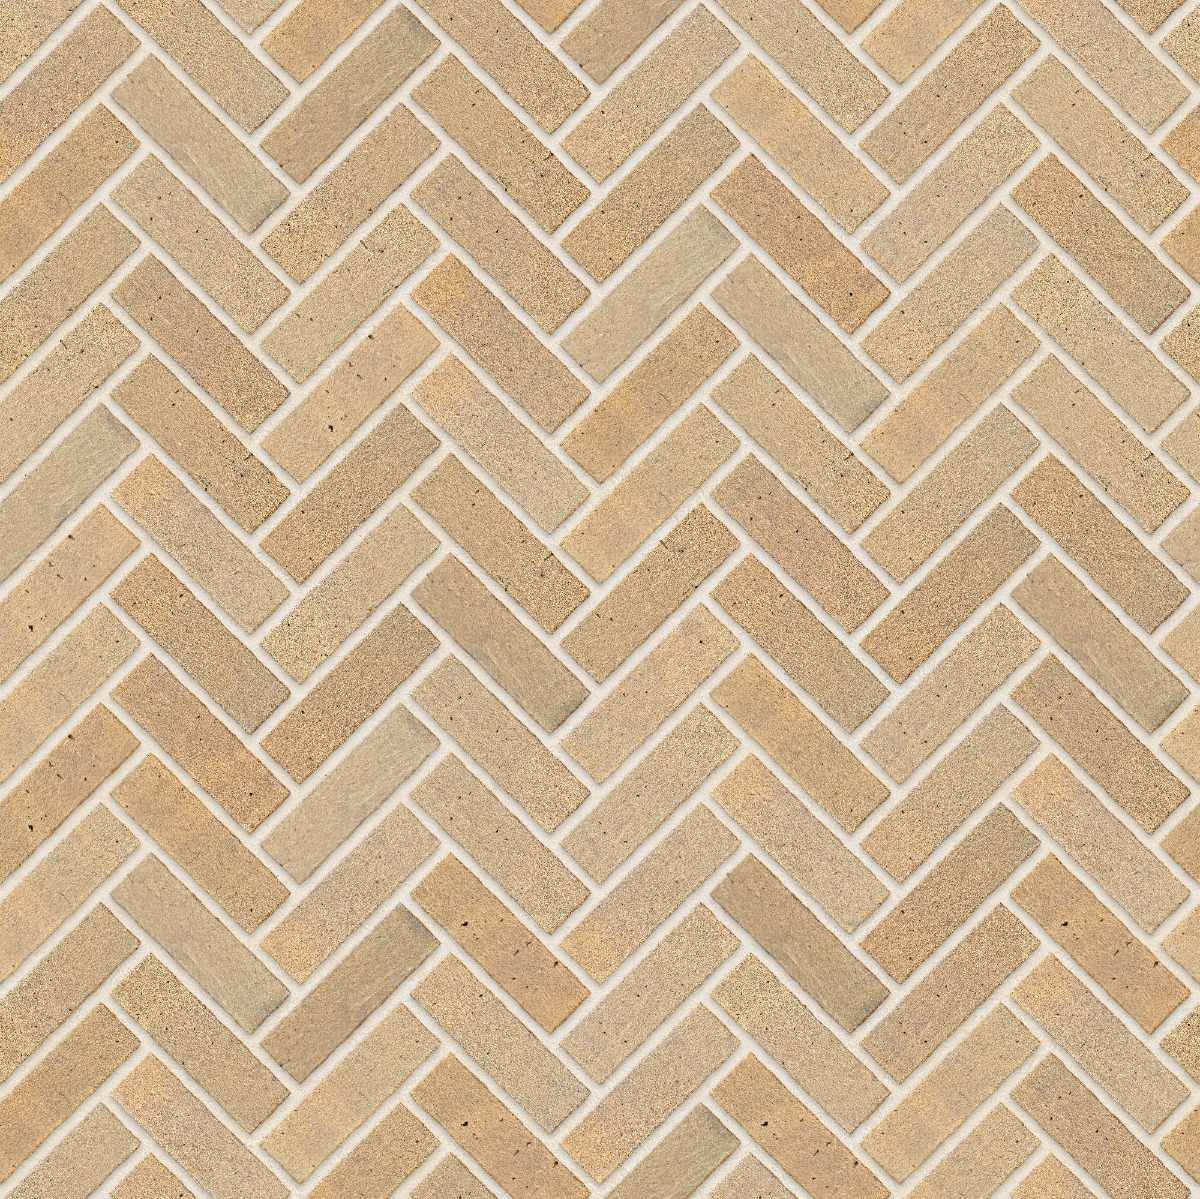 A seamless brick texture with hooff brick units arranged in a Herringbone pattern